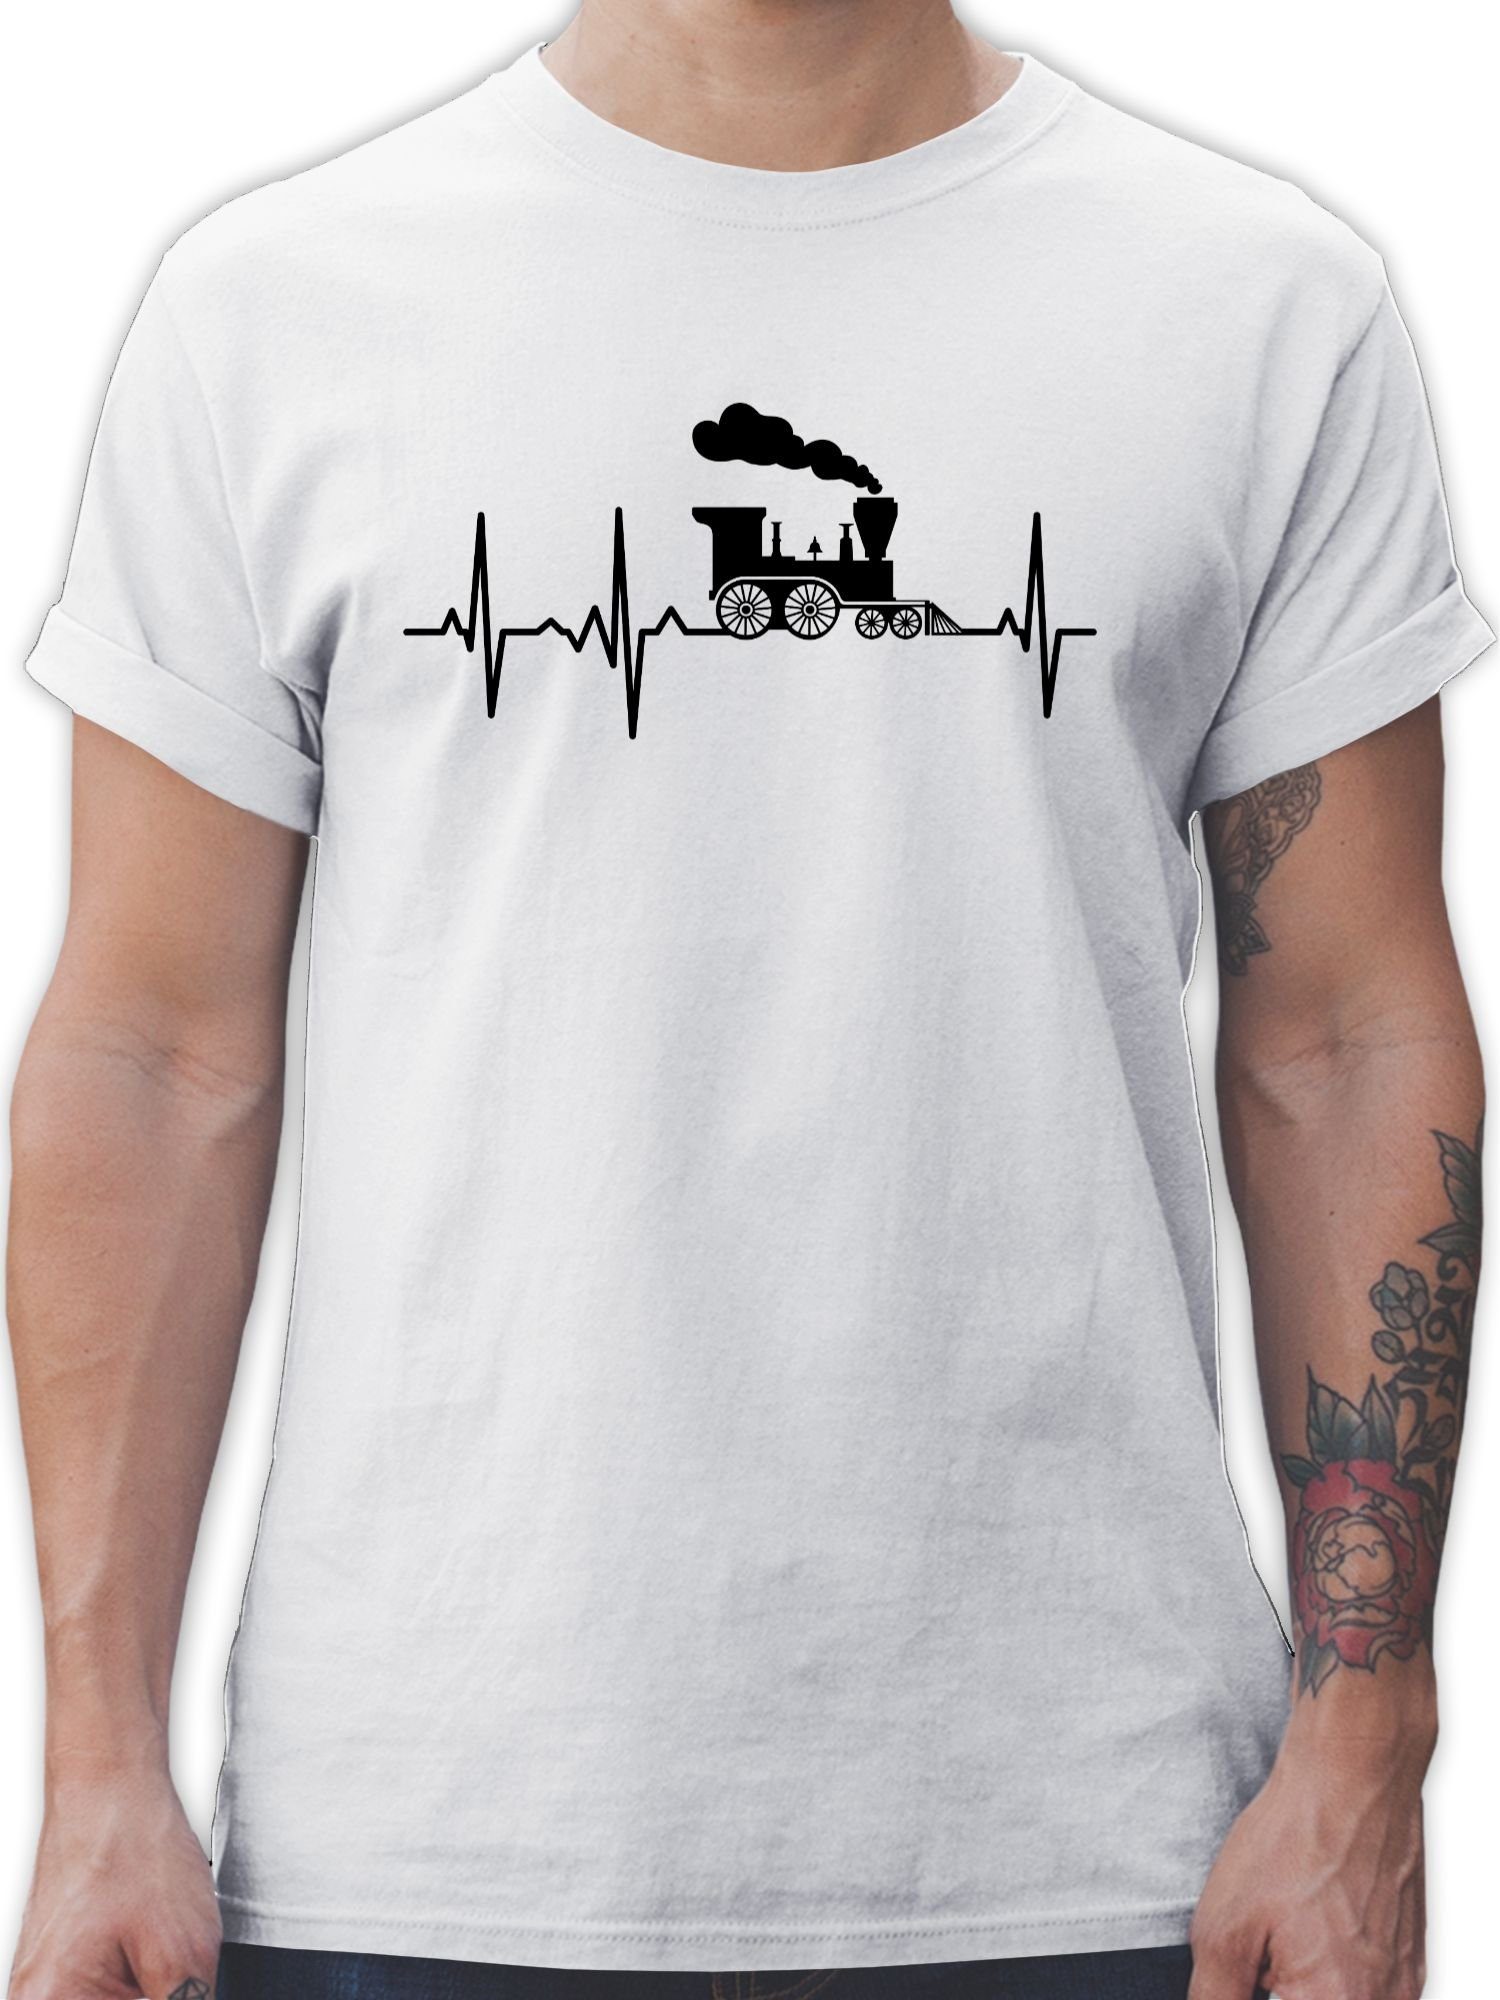 Shirtracer T-Shirt Dampflok Herzschlag I Dampflokomotive Geschenk Eisenbahner Eisenbahnli Hobby Outfit 3 Weiß